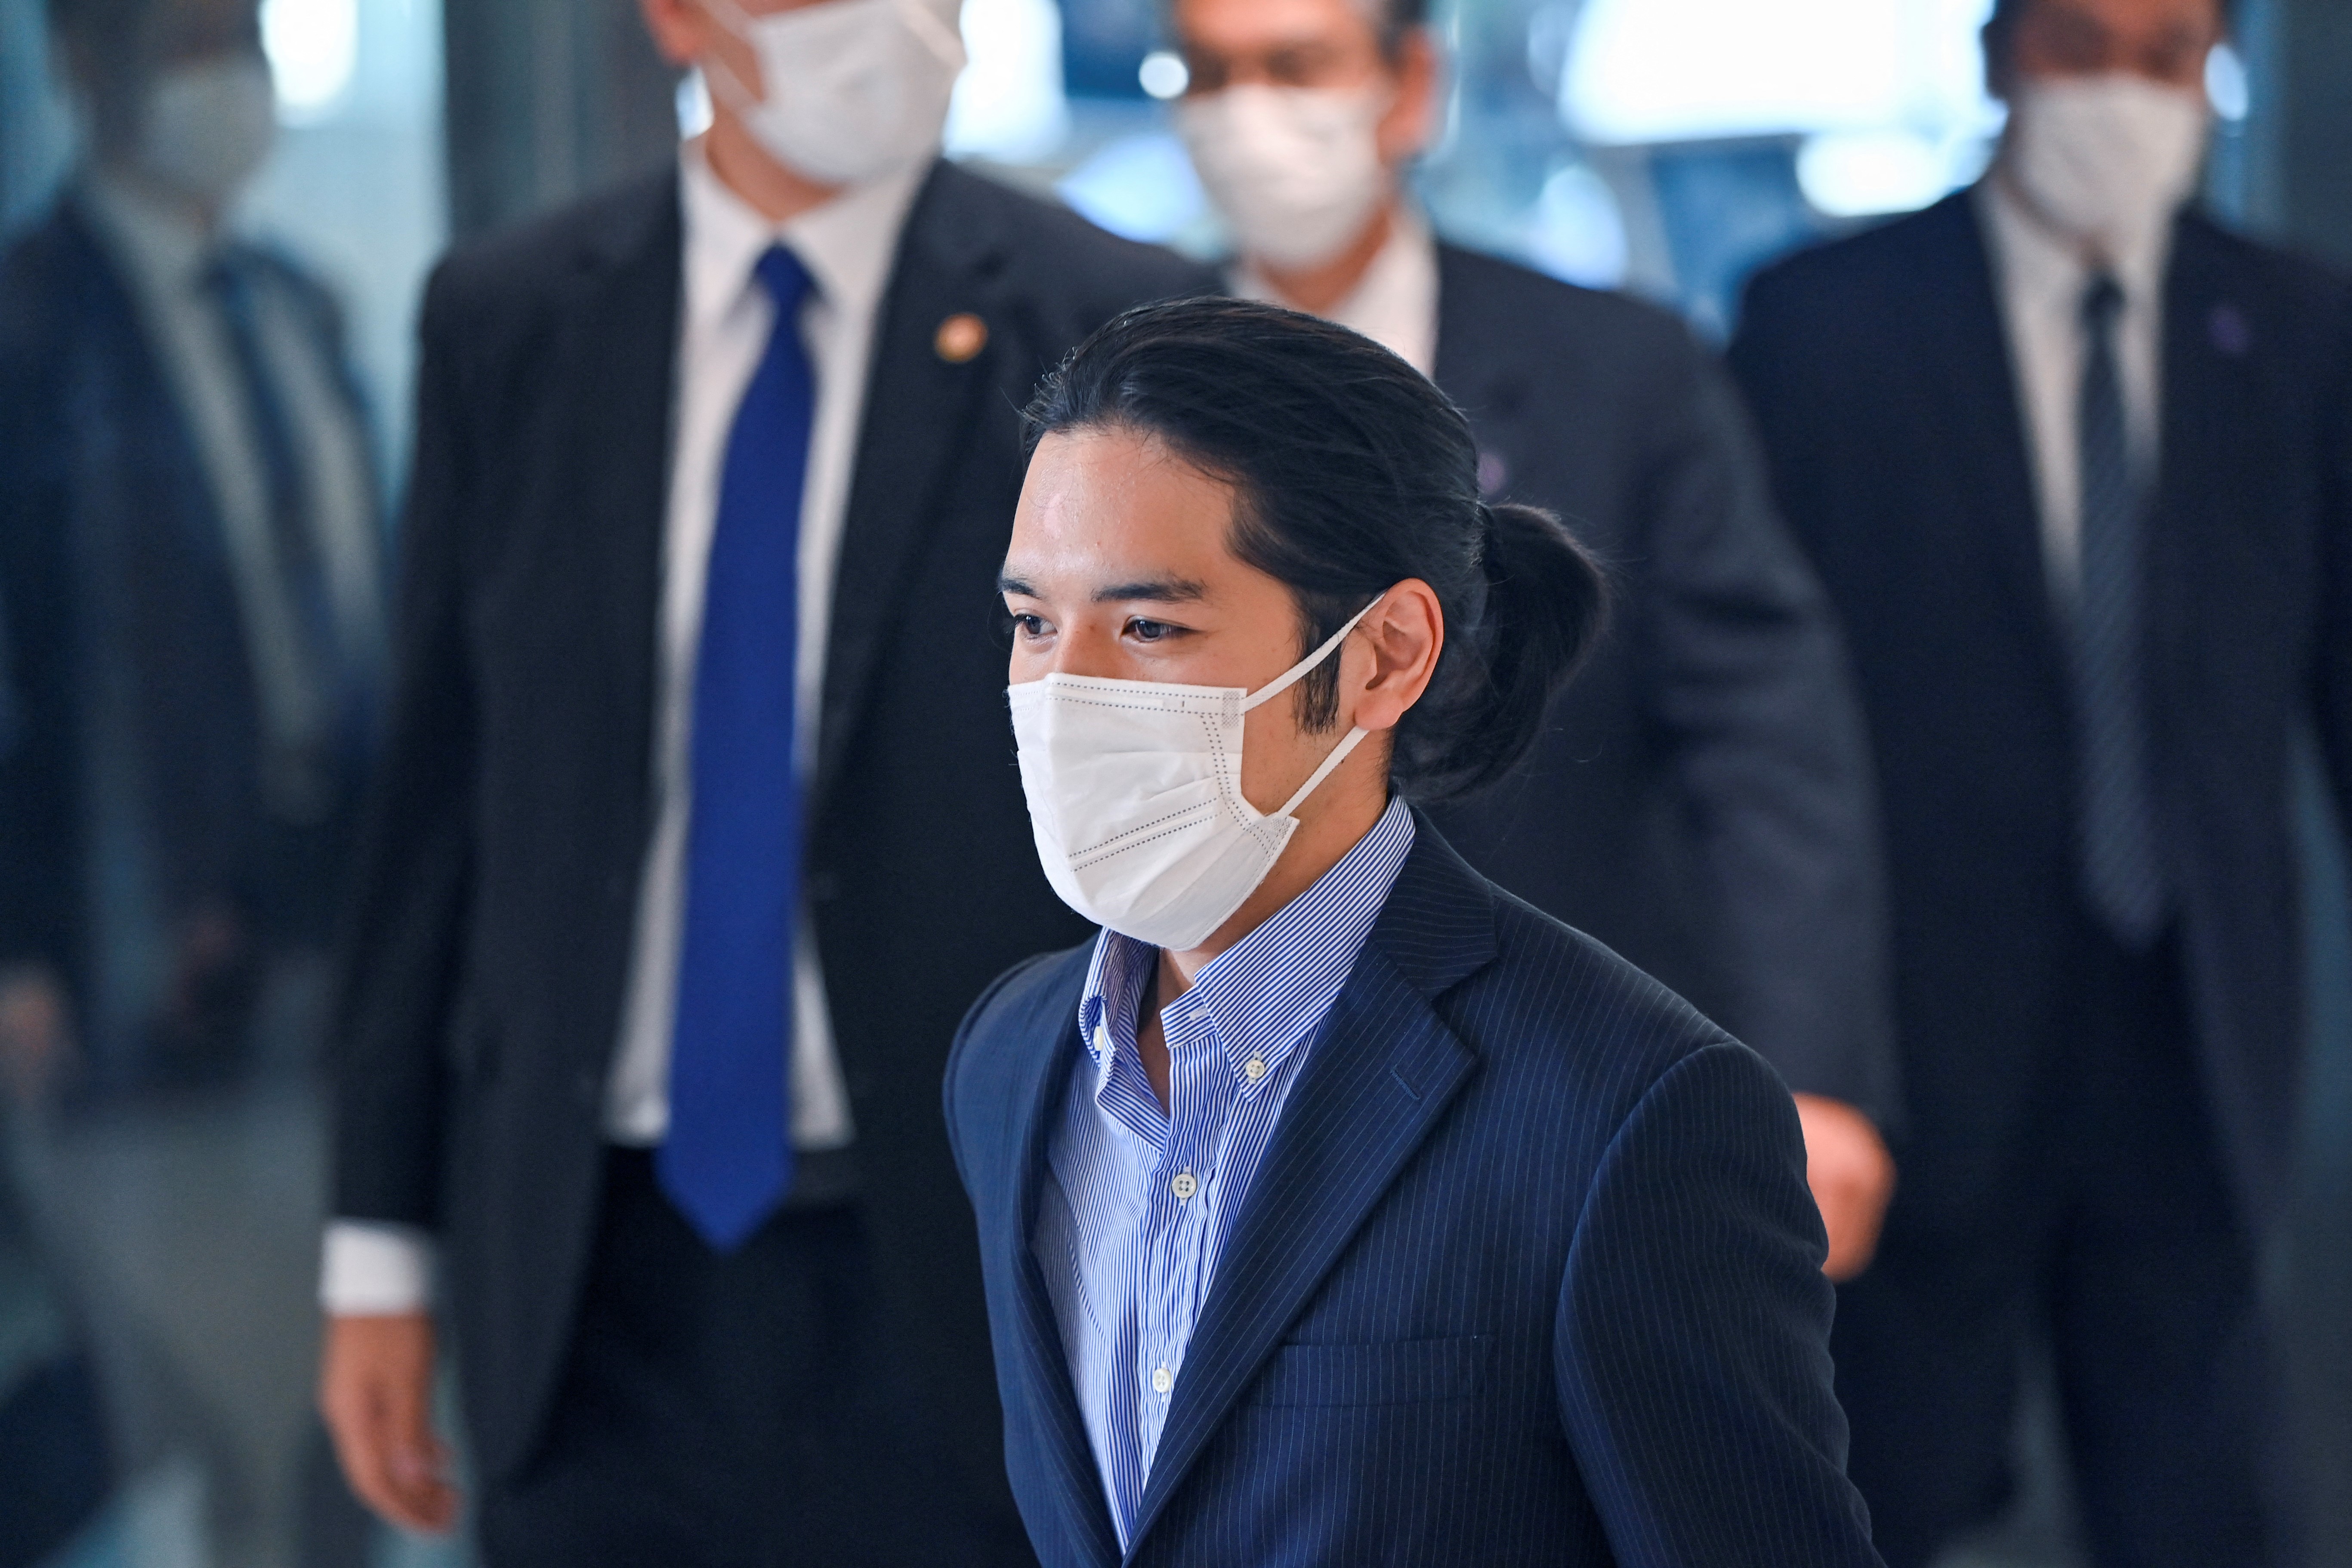 Kei Komuro (center) arrives at Narita airport in Japan from the United States last month. Photo: Kazuhiro NOGI / AFP